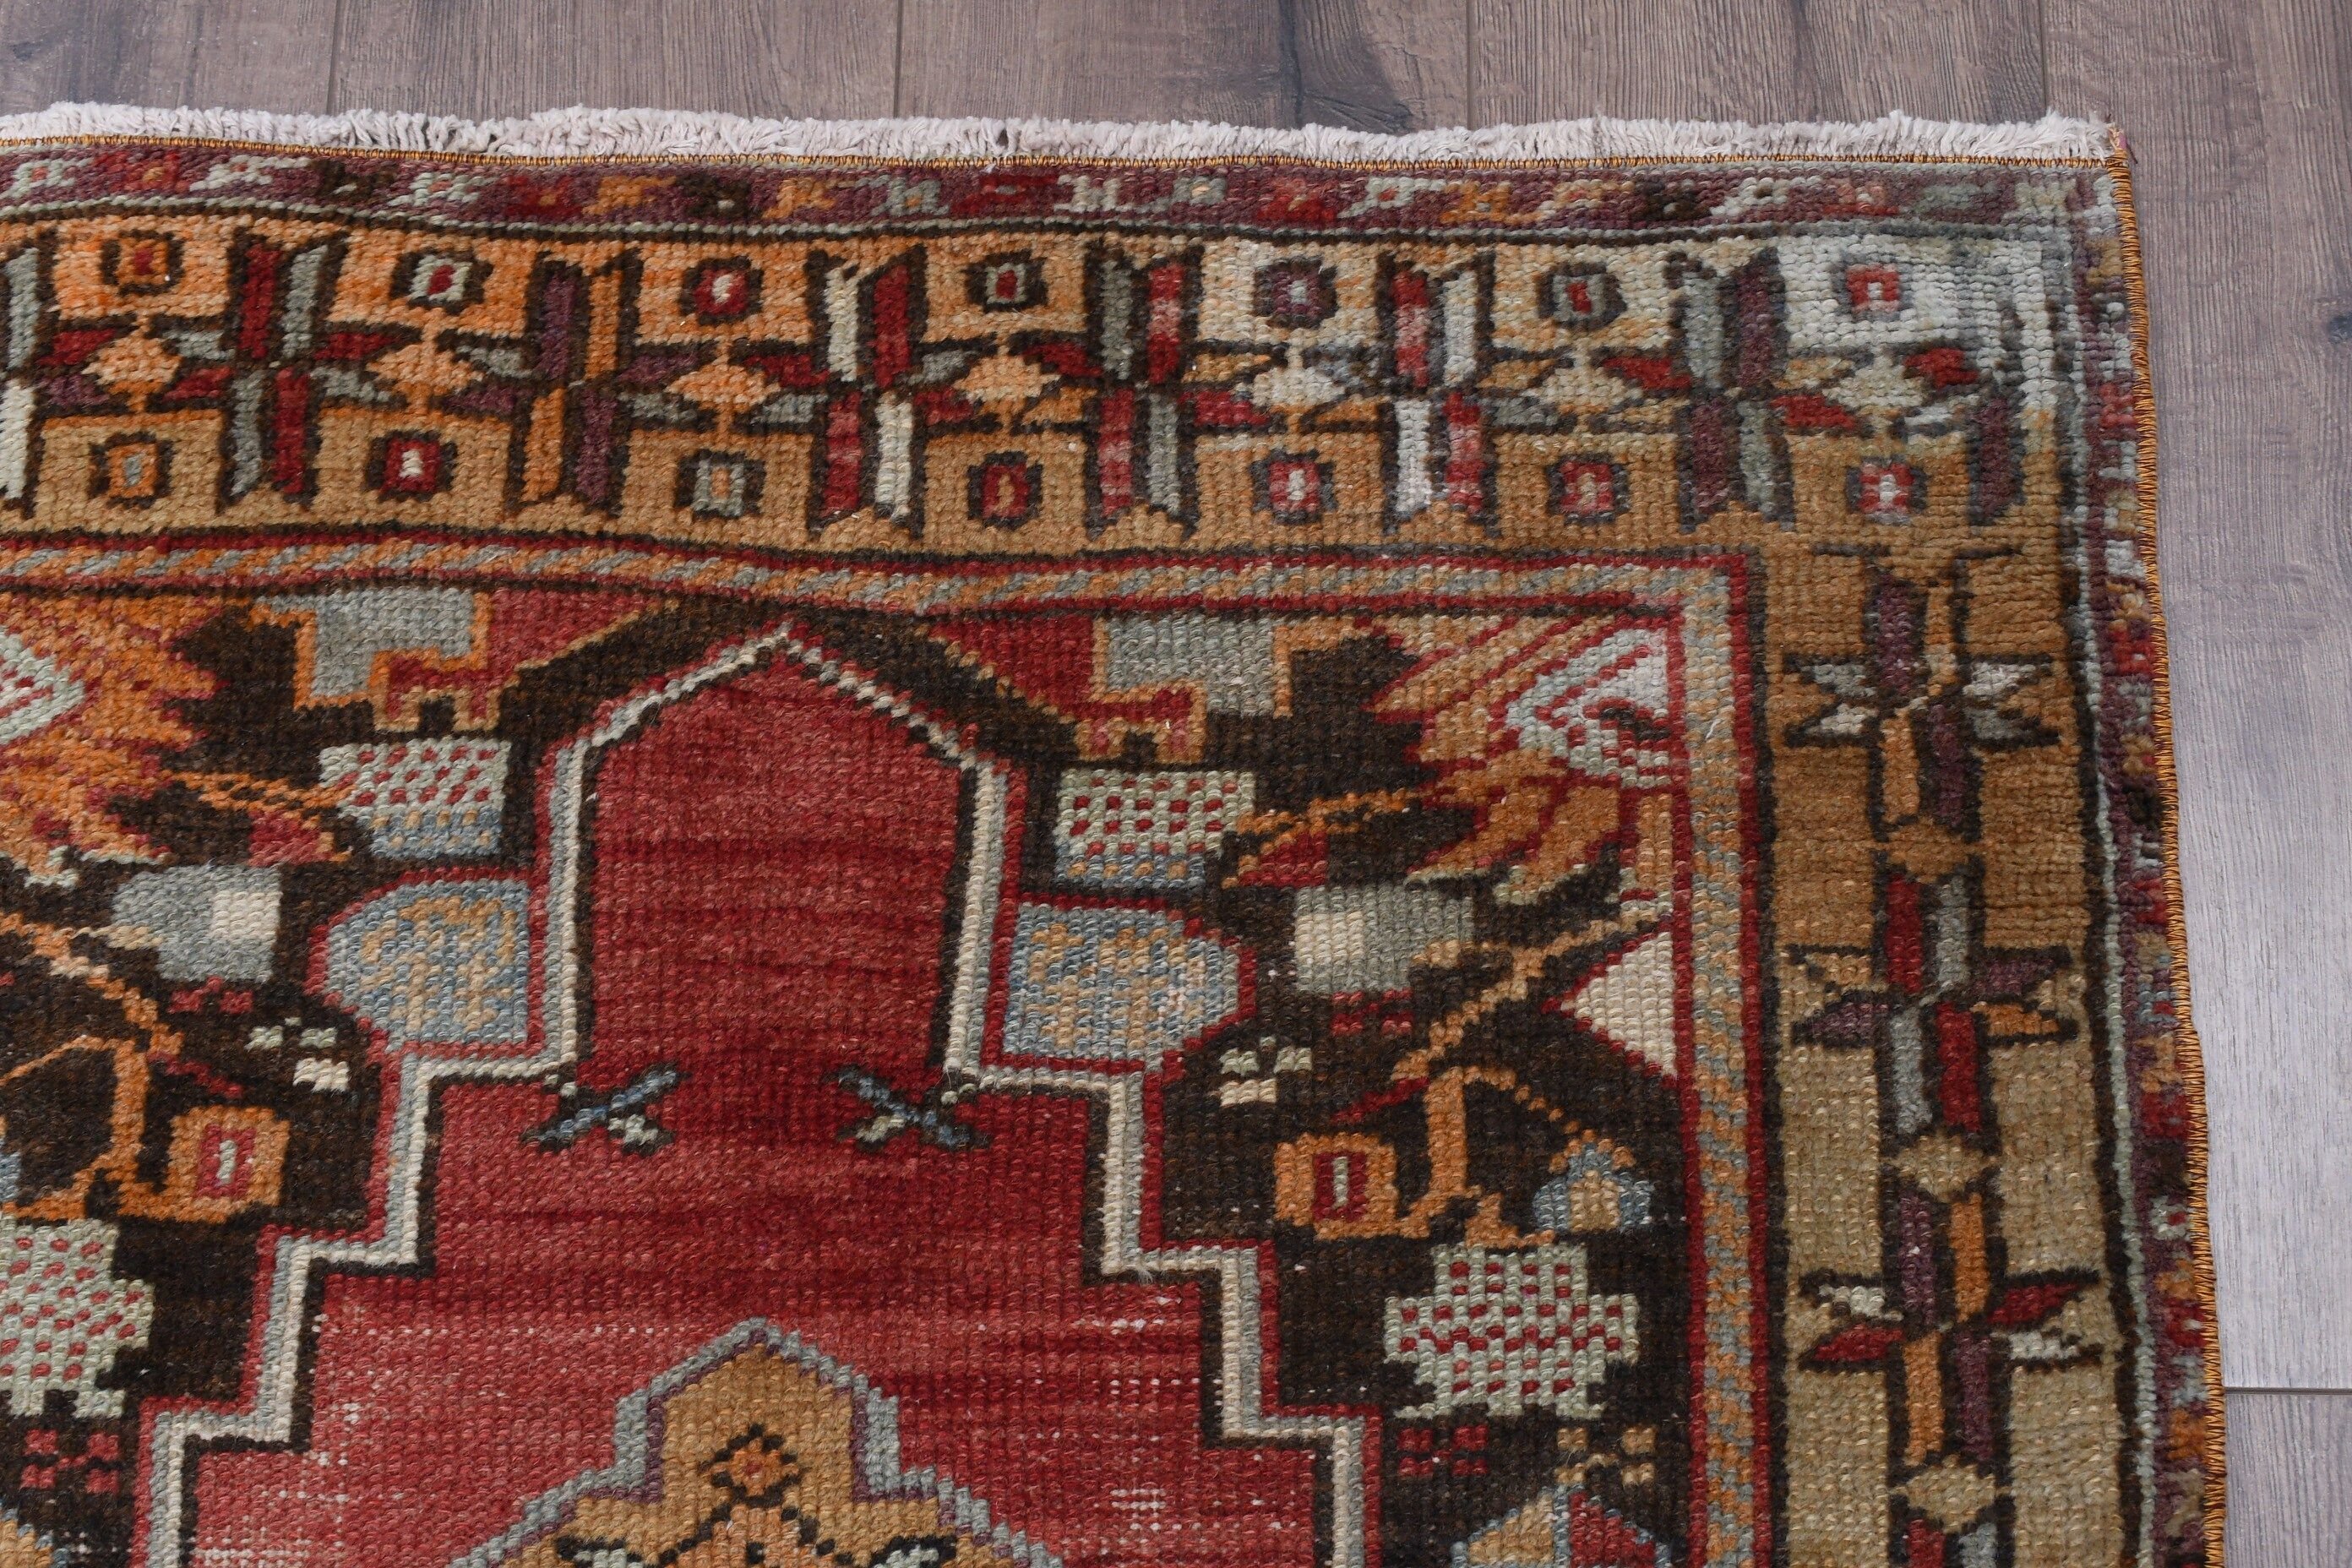 Oriental Rug, Vintage Rugs, Door Mat Rug, Pale Rug, Turkish Rugs, Red Home Decor Rug, Wall Hanging Rug, 2.9x4.7 ft Small Rug